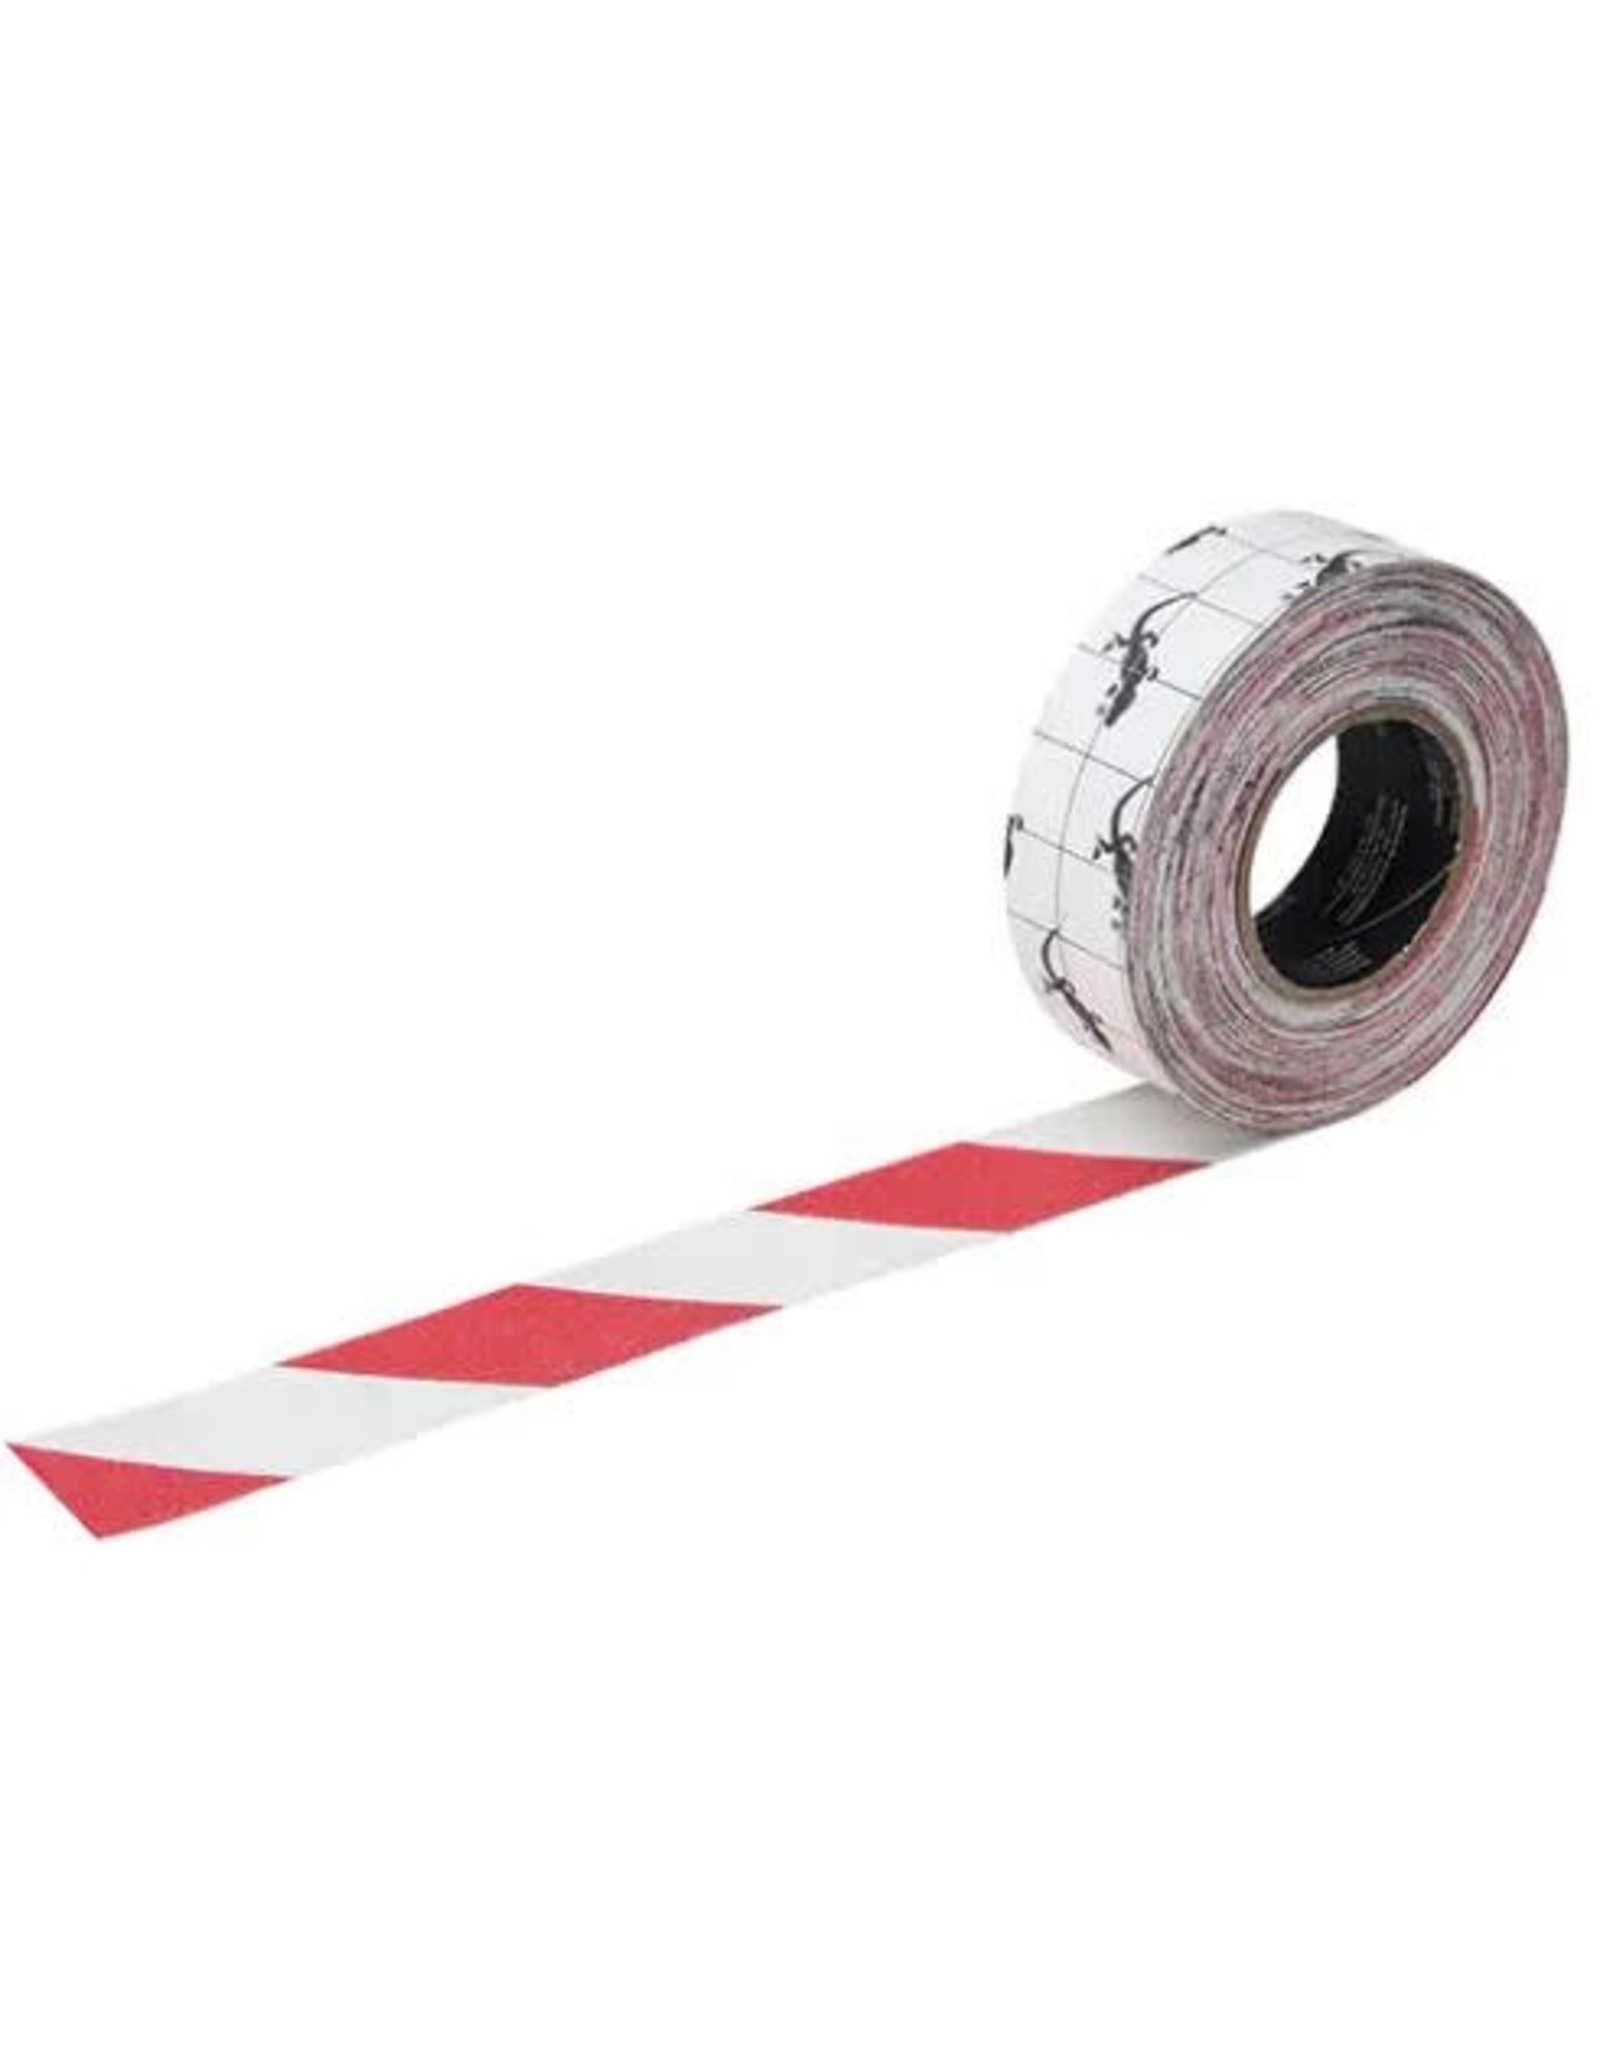 Zenith Anti-Skid Tape, Red/Wht Stripes, 2" x 60'